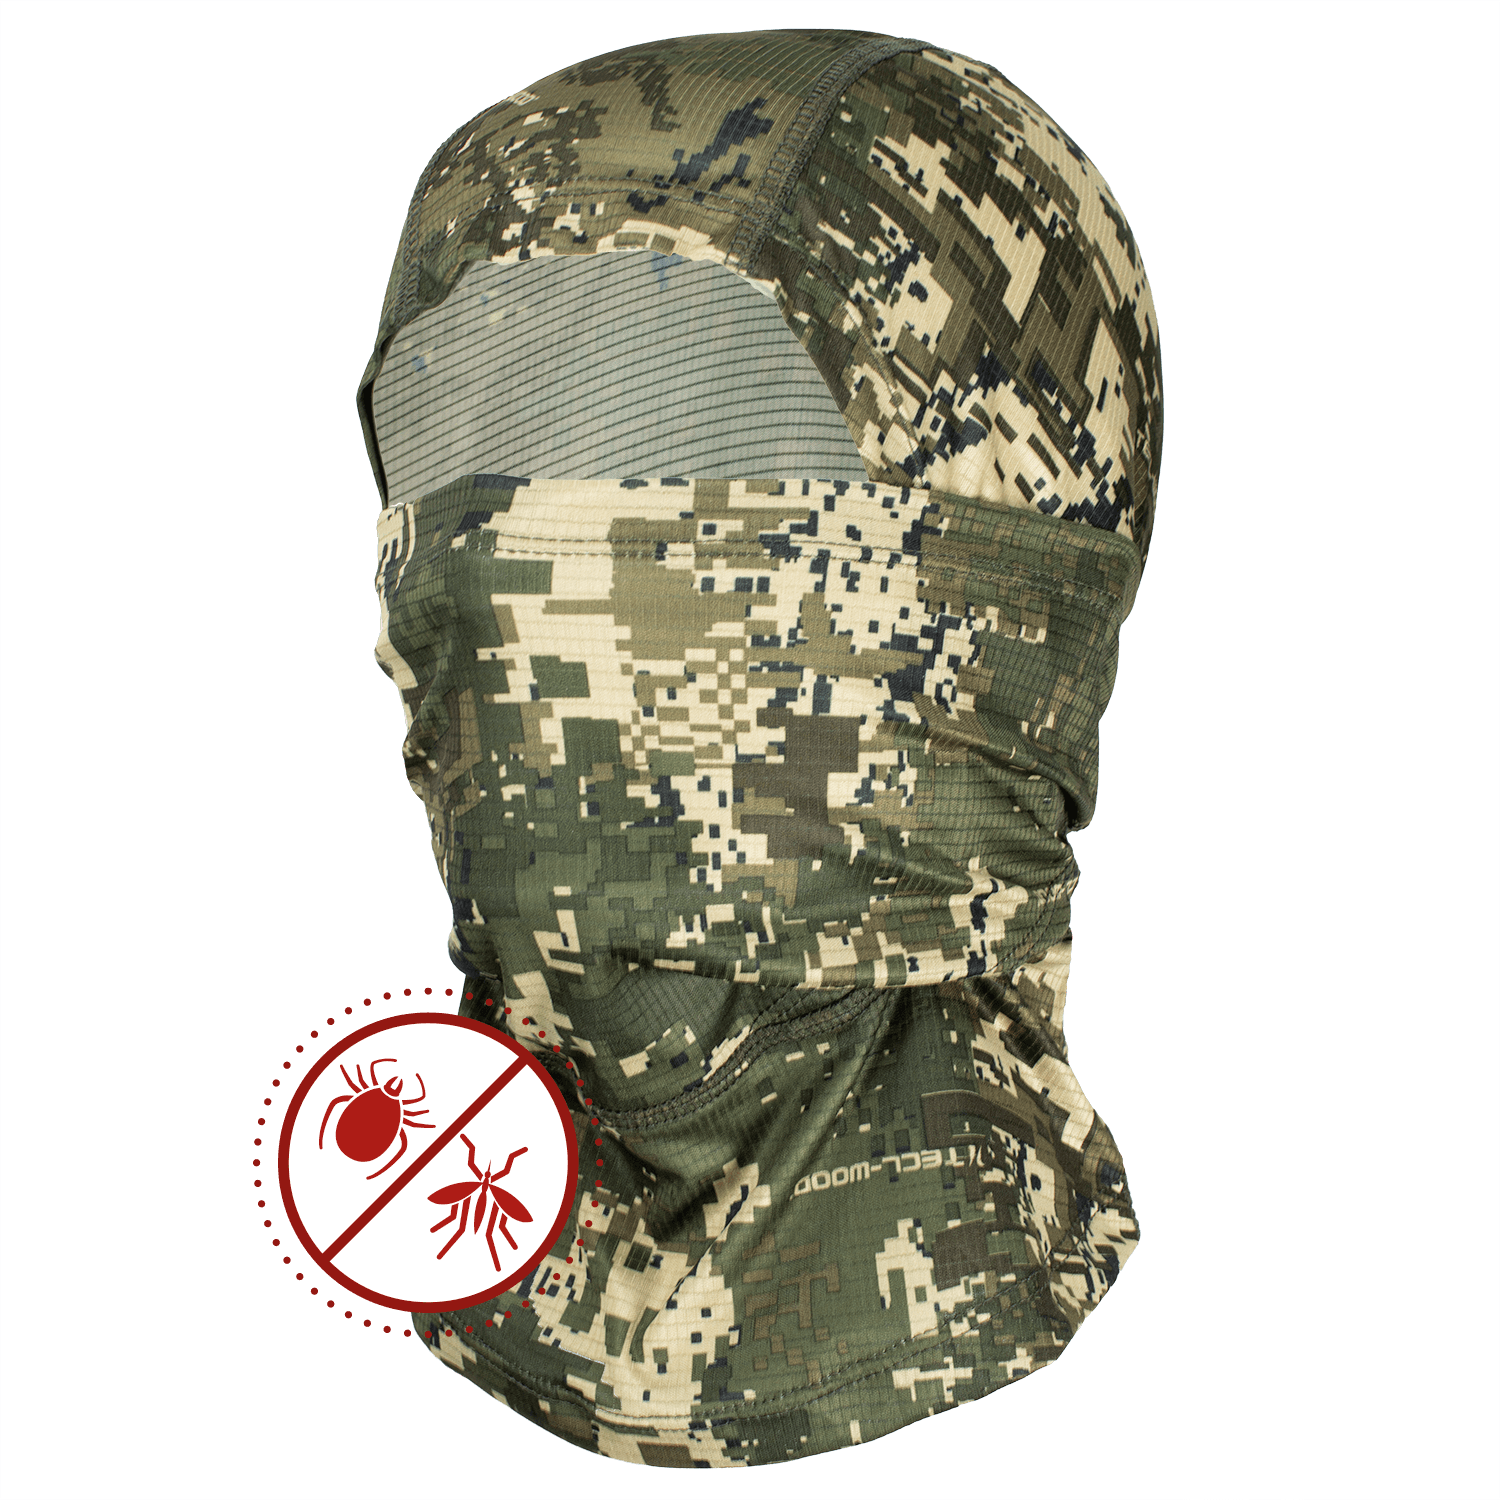  Pirscher Gear Ultralicht Tanatex camouflagemasker (Optimax) - Zomer jachtkleding